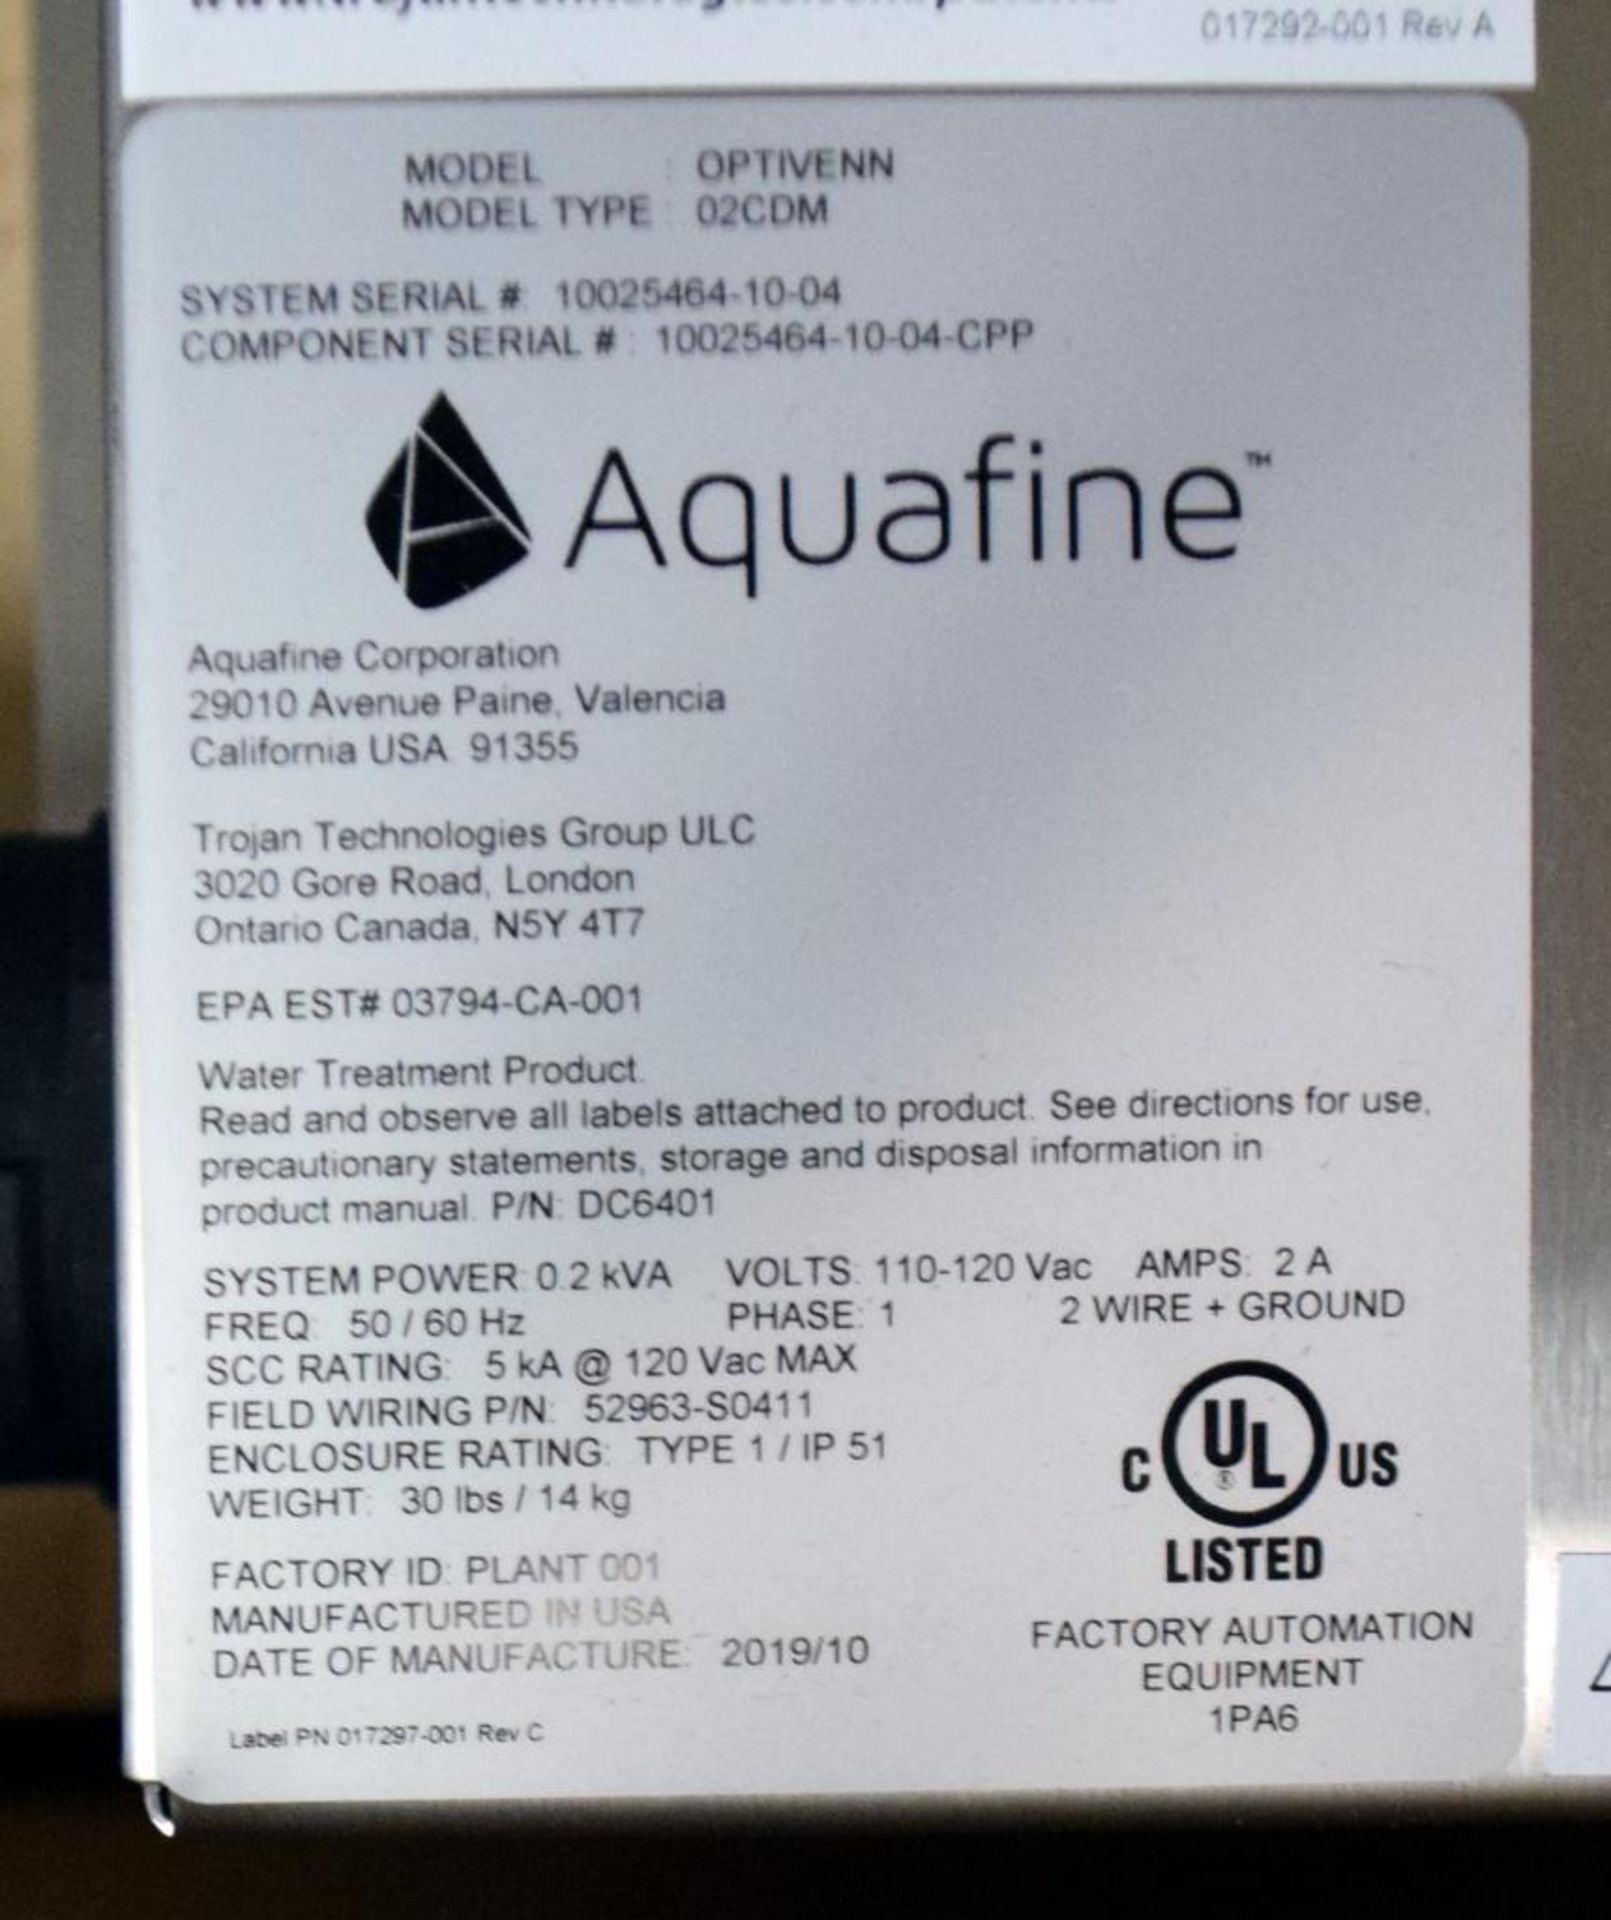 AQUAFINE OPTIVENN Series Ultraviolet Disinfection Unit Model 02CDM, 316L Stainless Steel Constructio - Image 2 of 2